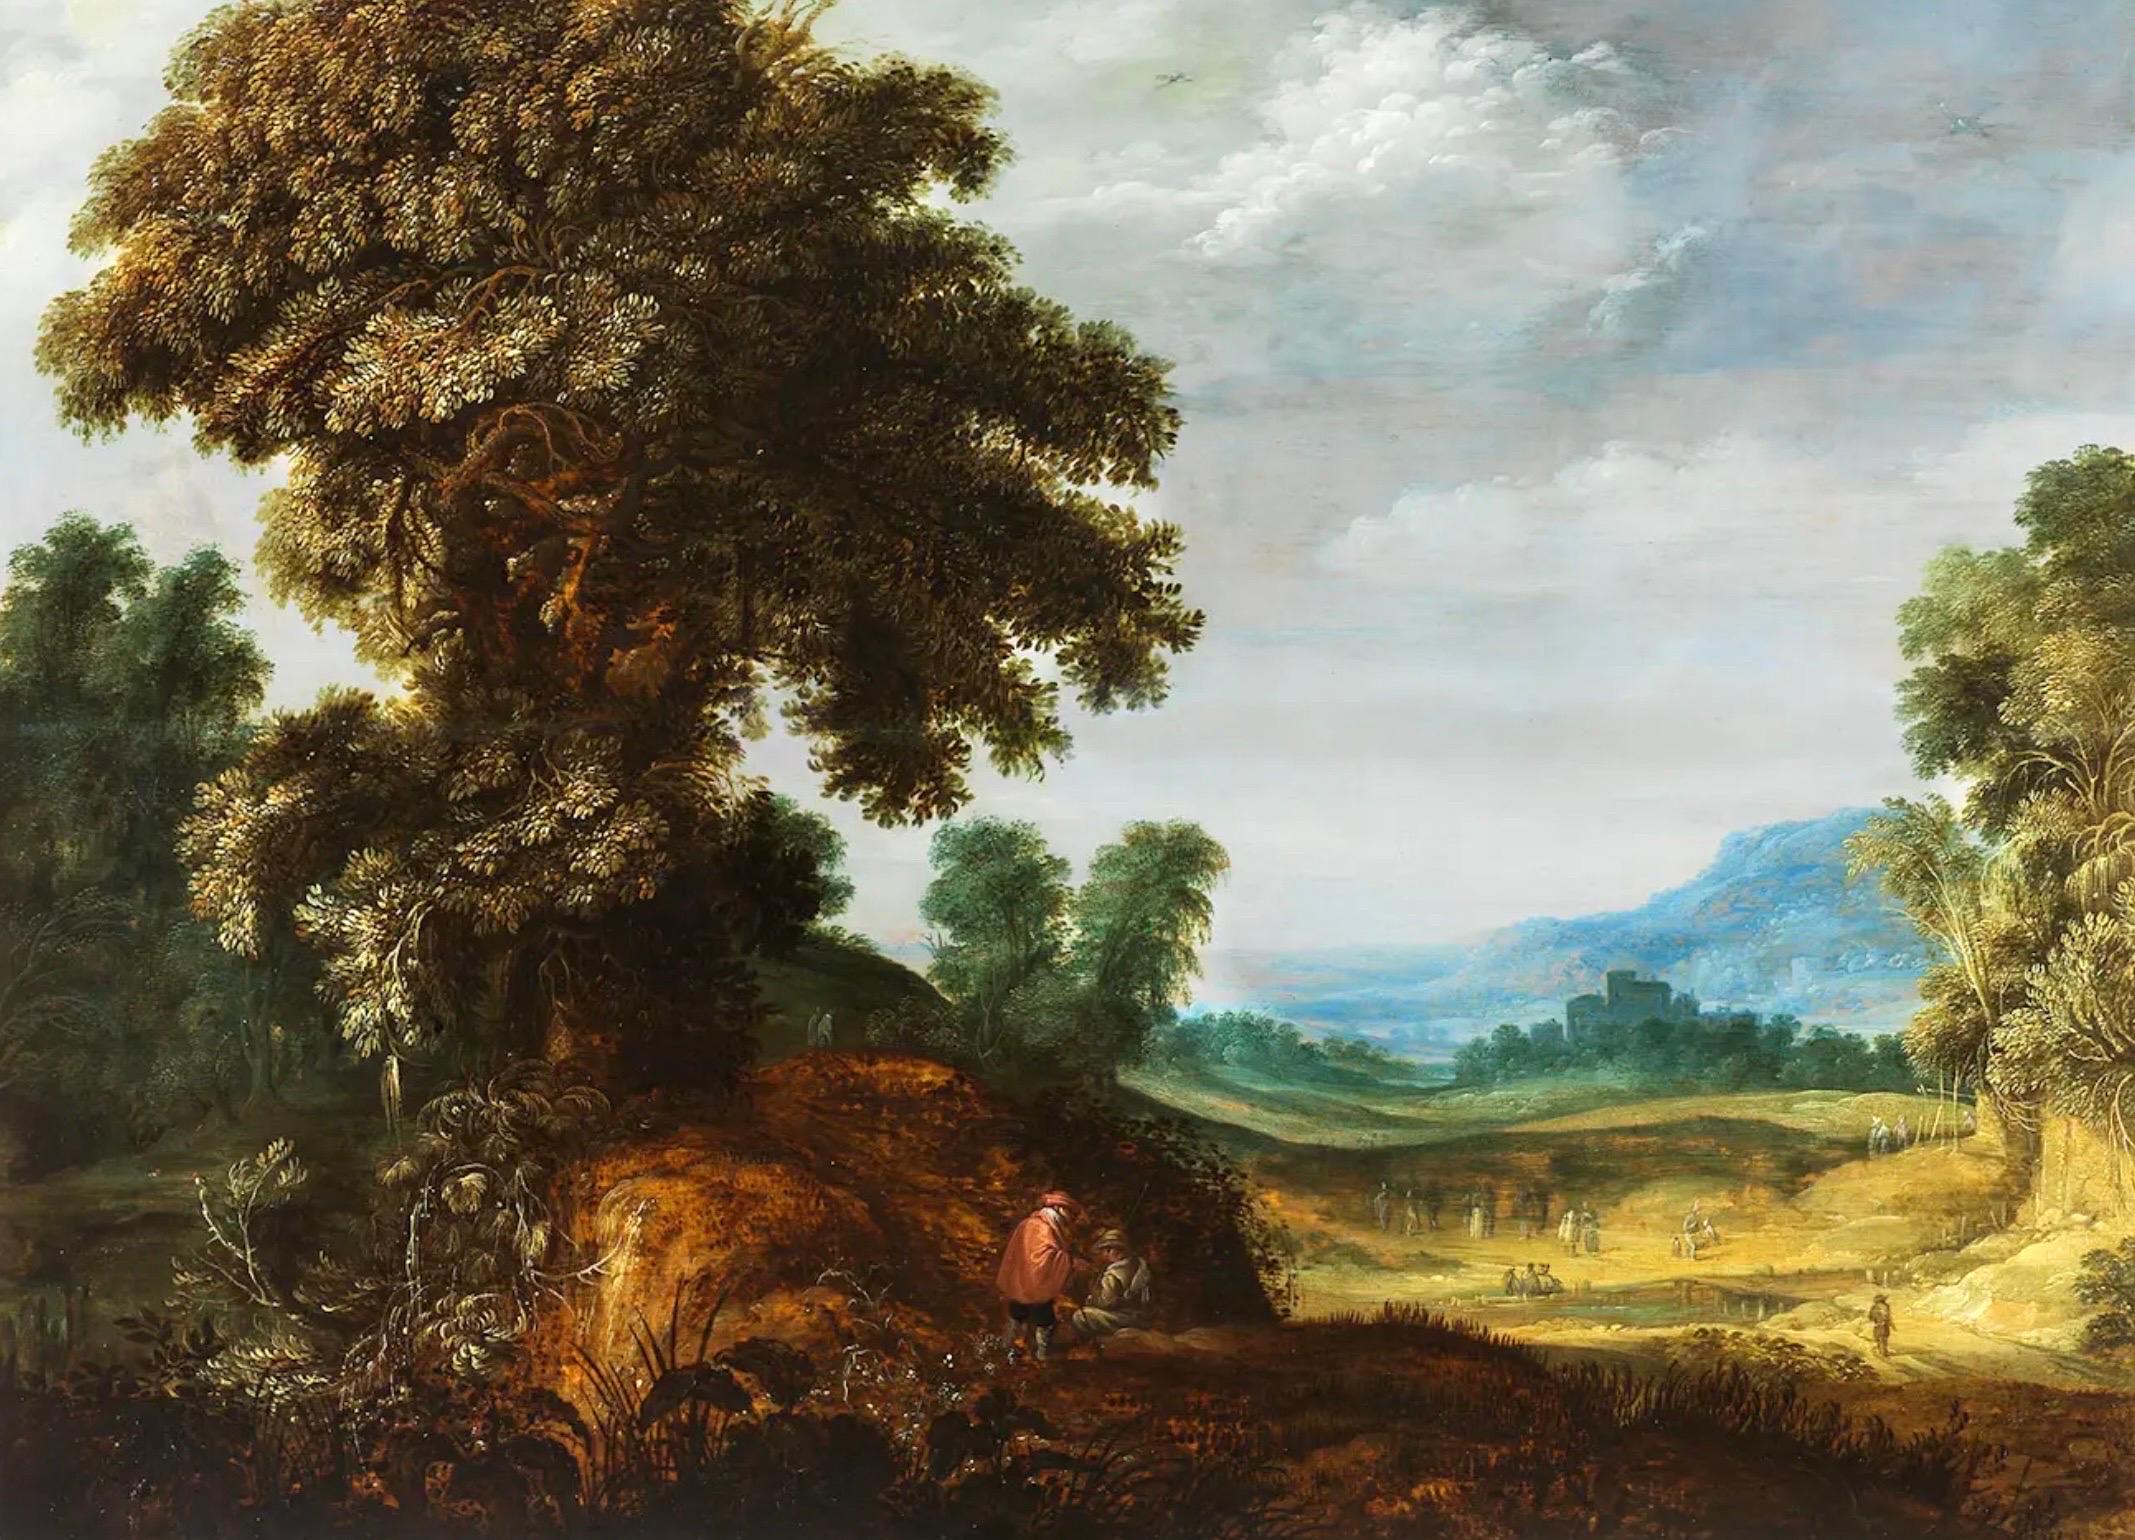 Alexander Keirincx Landscape Painting - 17th century Flemish Old Master painting - Vast landscape with a majestic oak